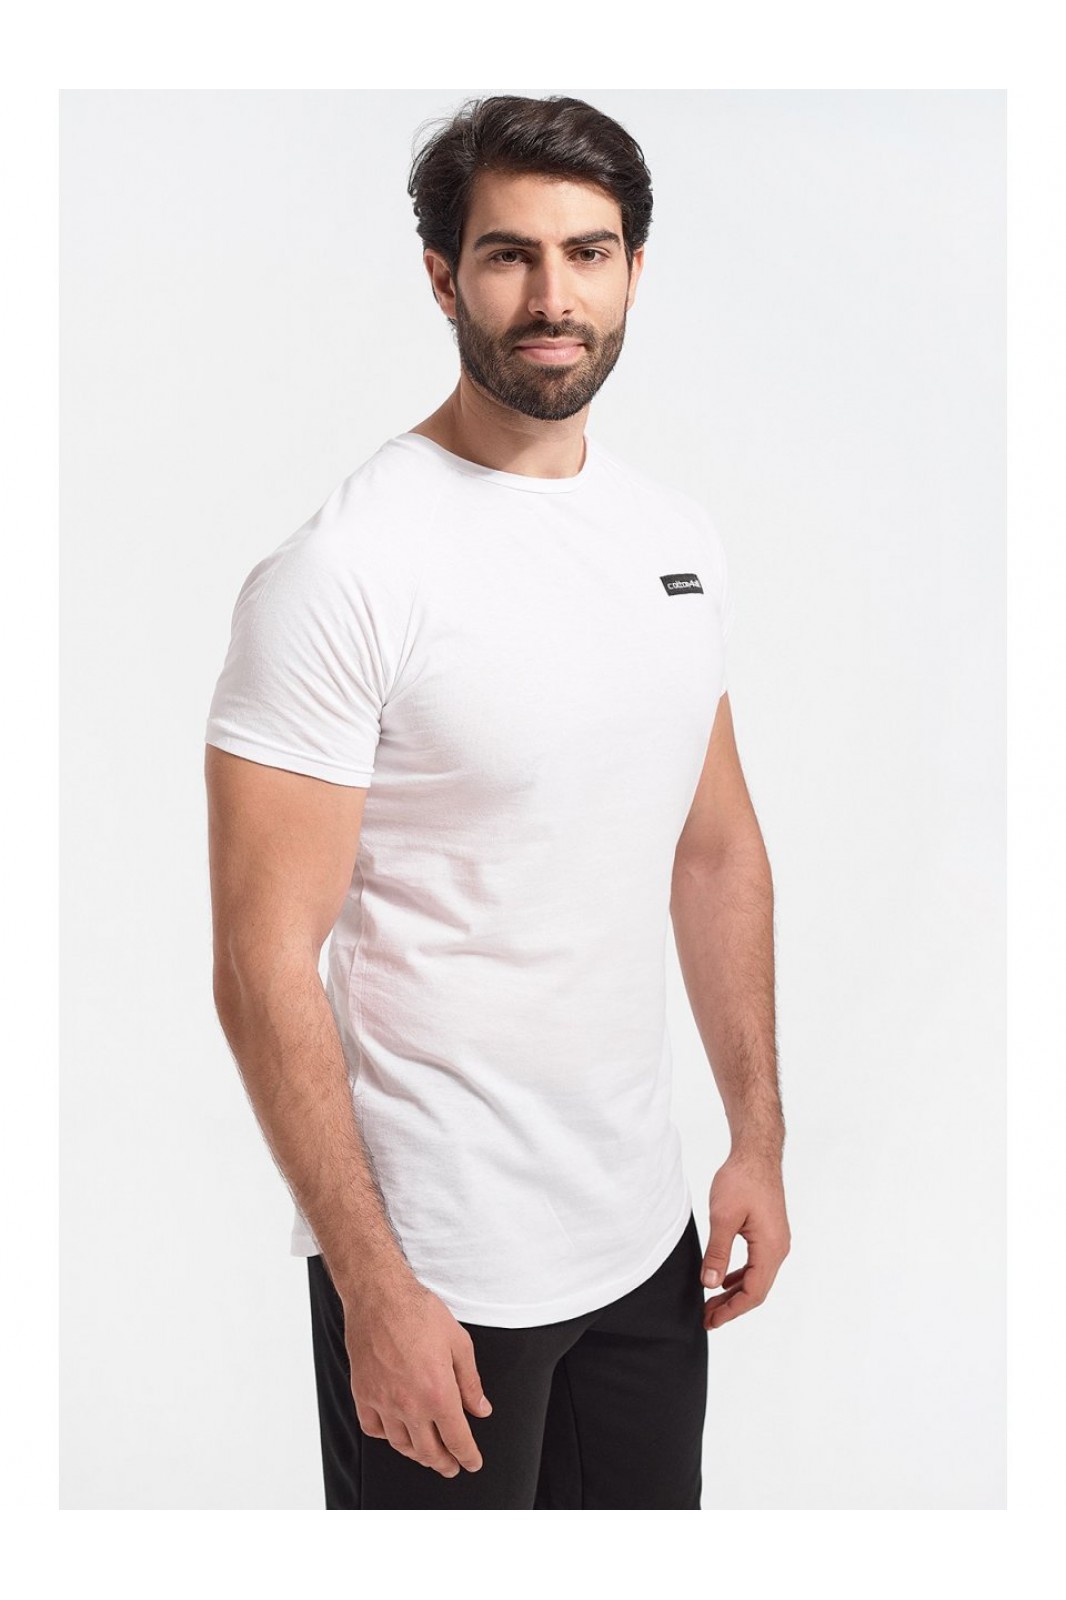 Männer T-Shirt BLACK MAMBA Weiß